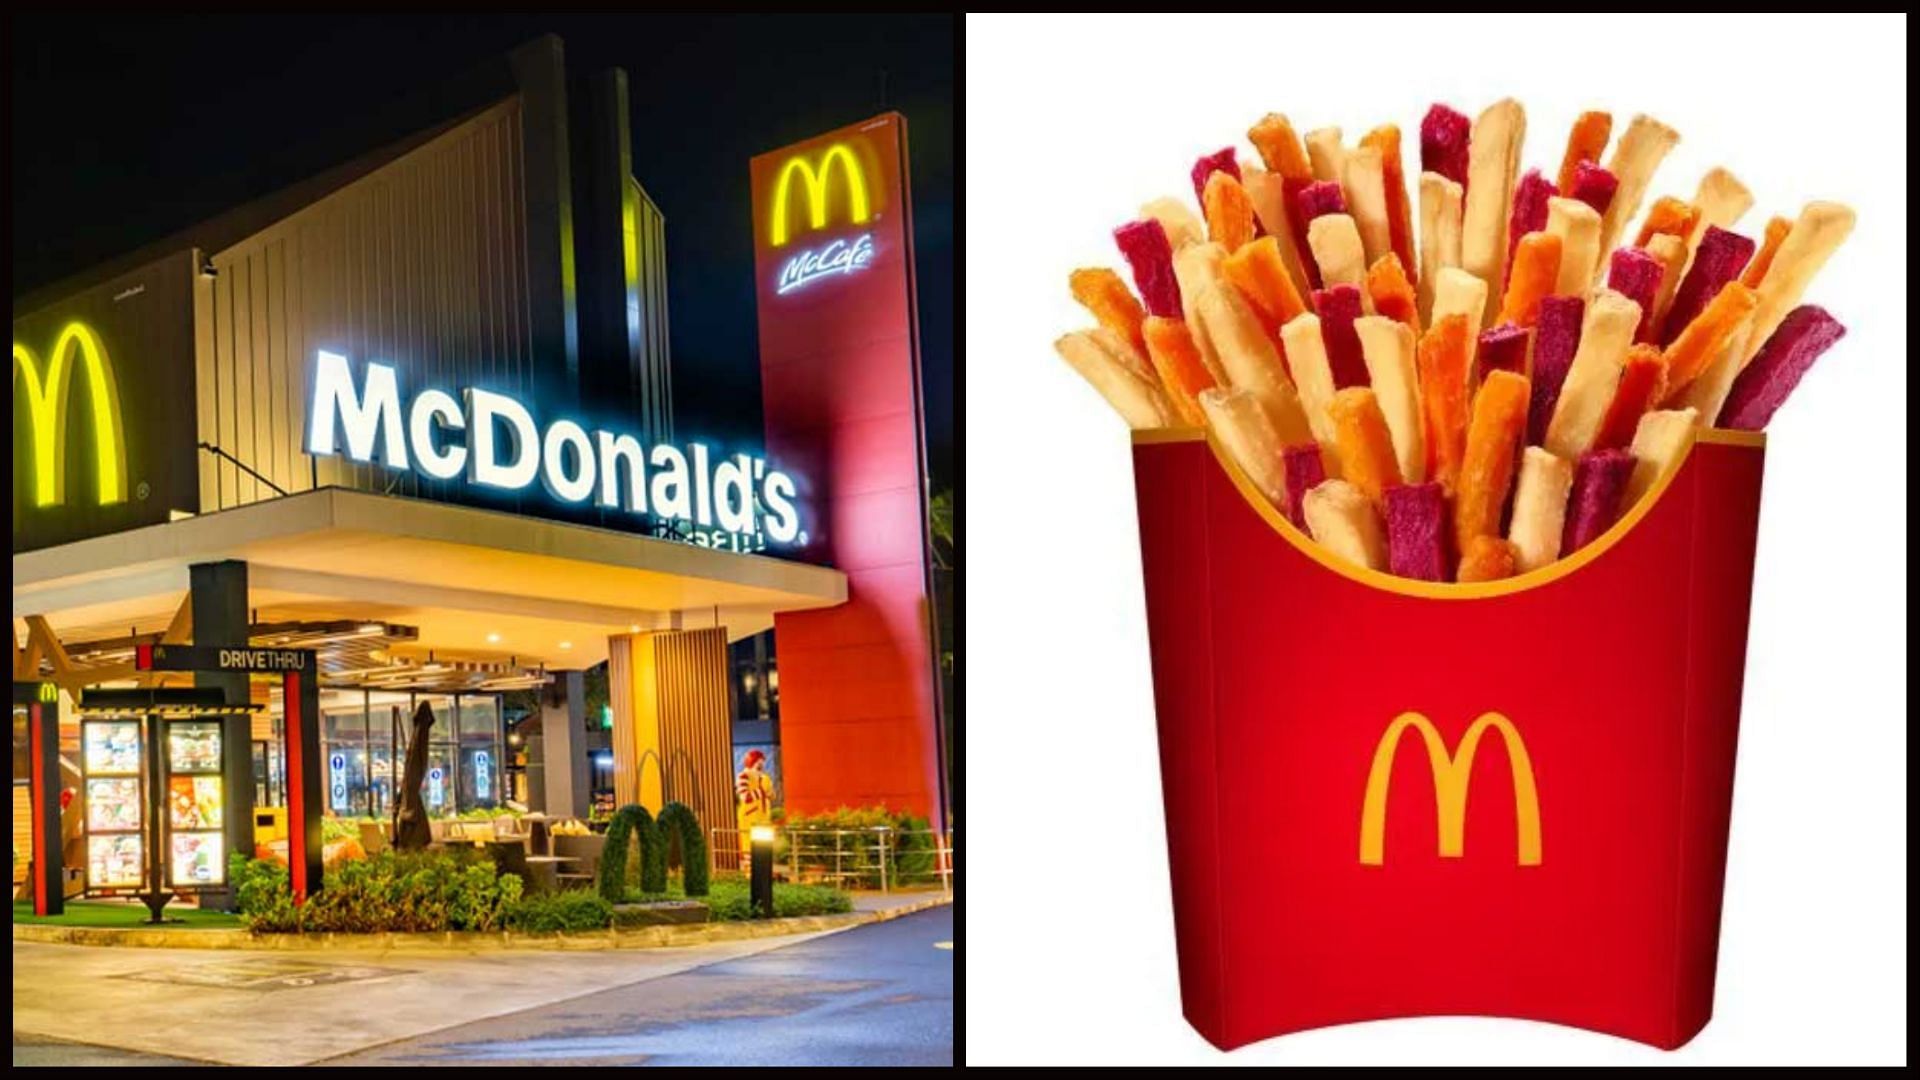 Newly introduced McDonald